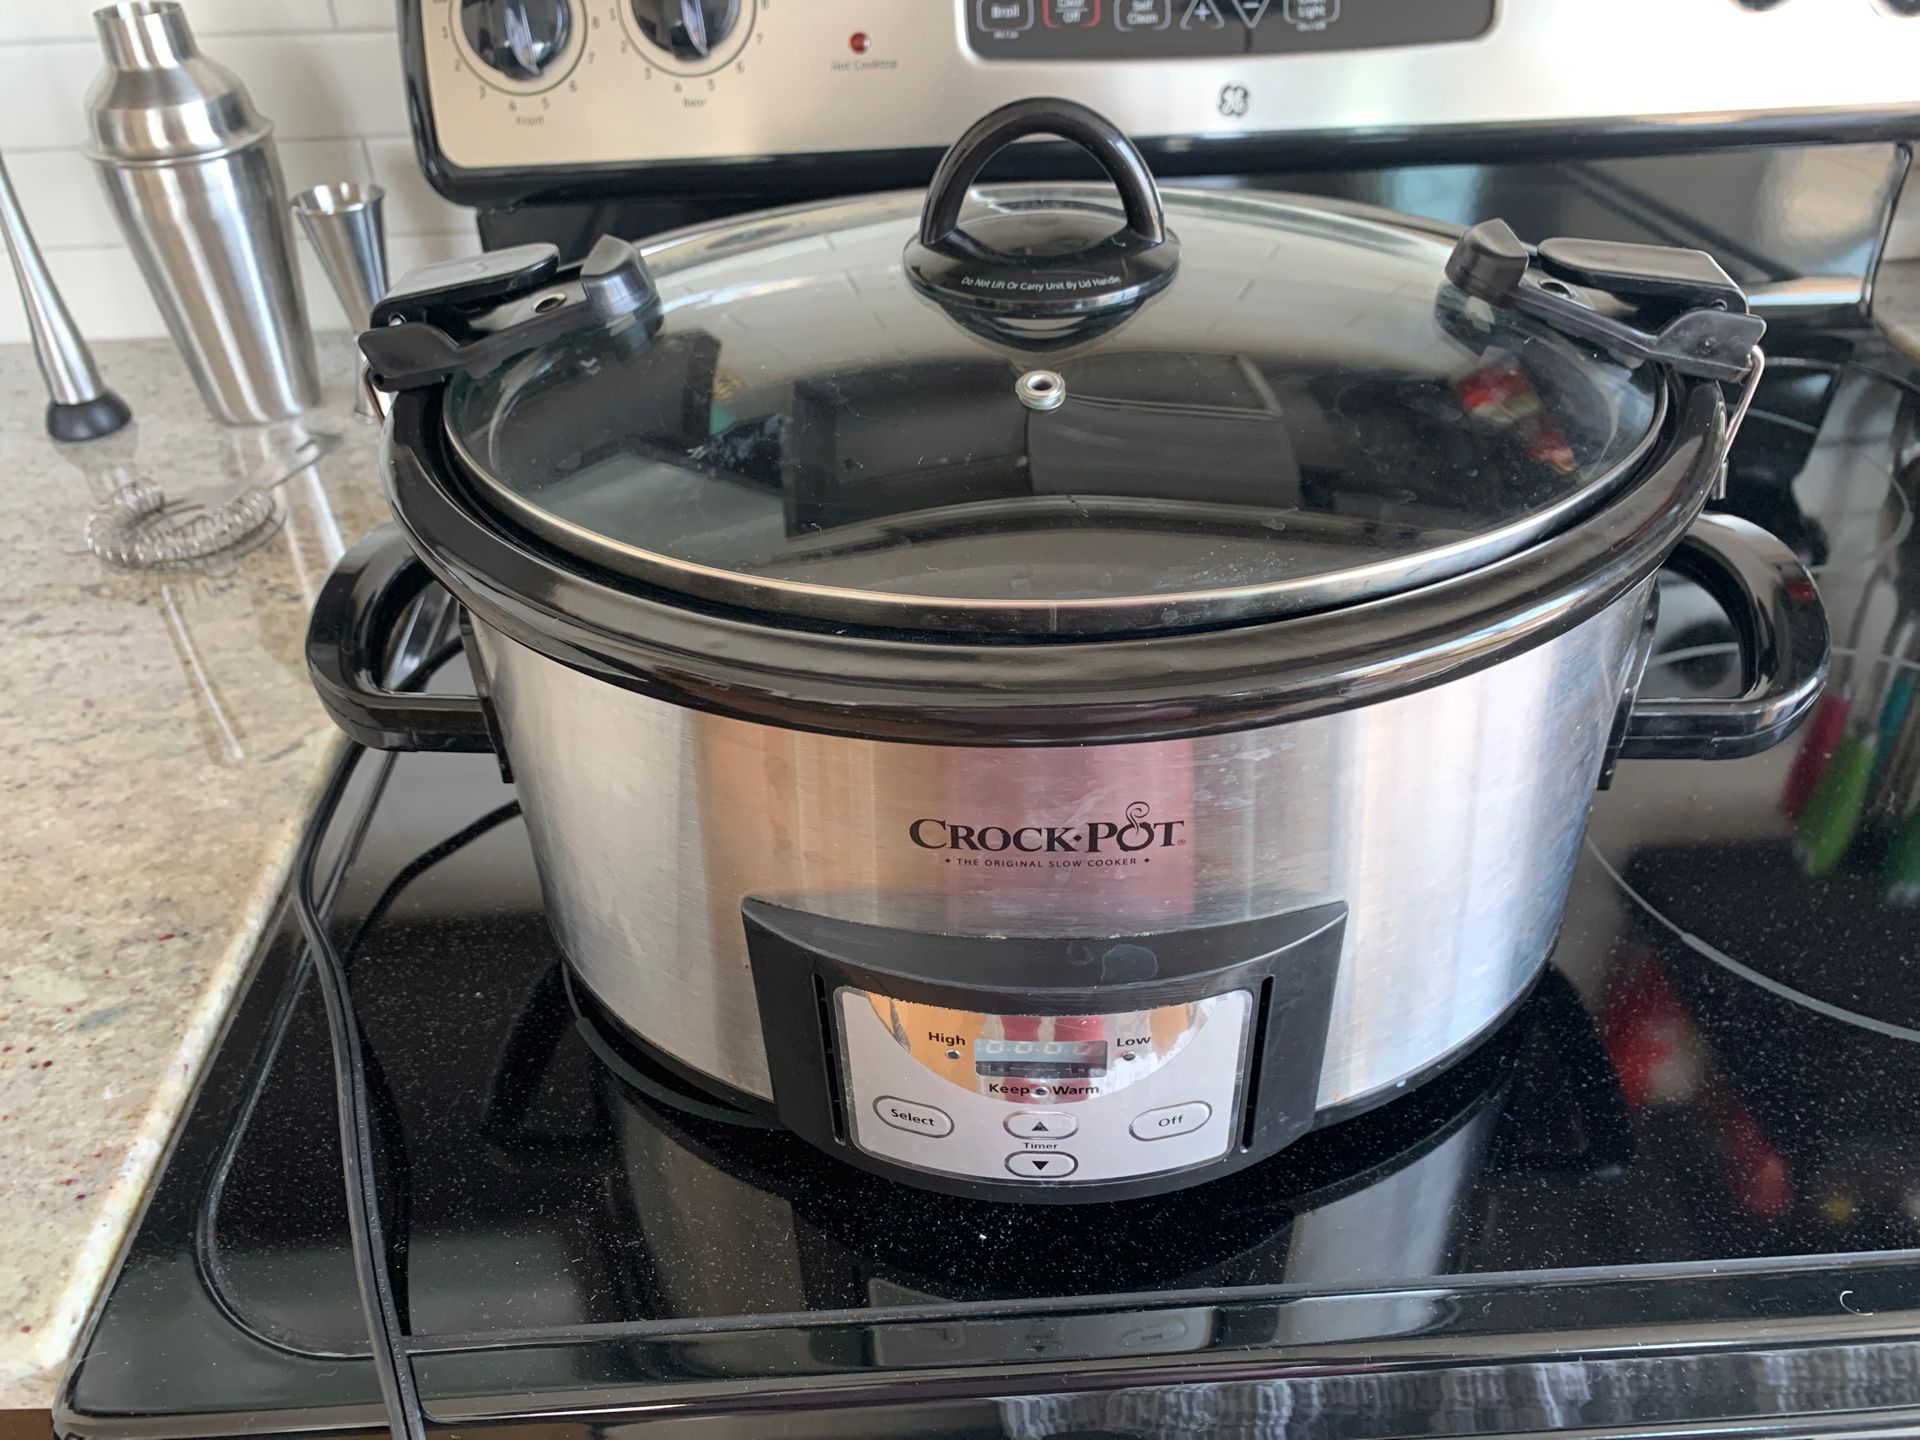 Crock pot - slow cooker